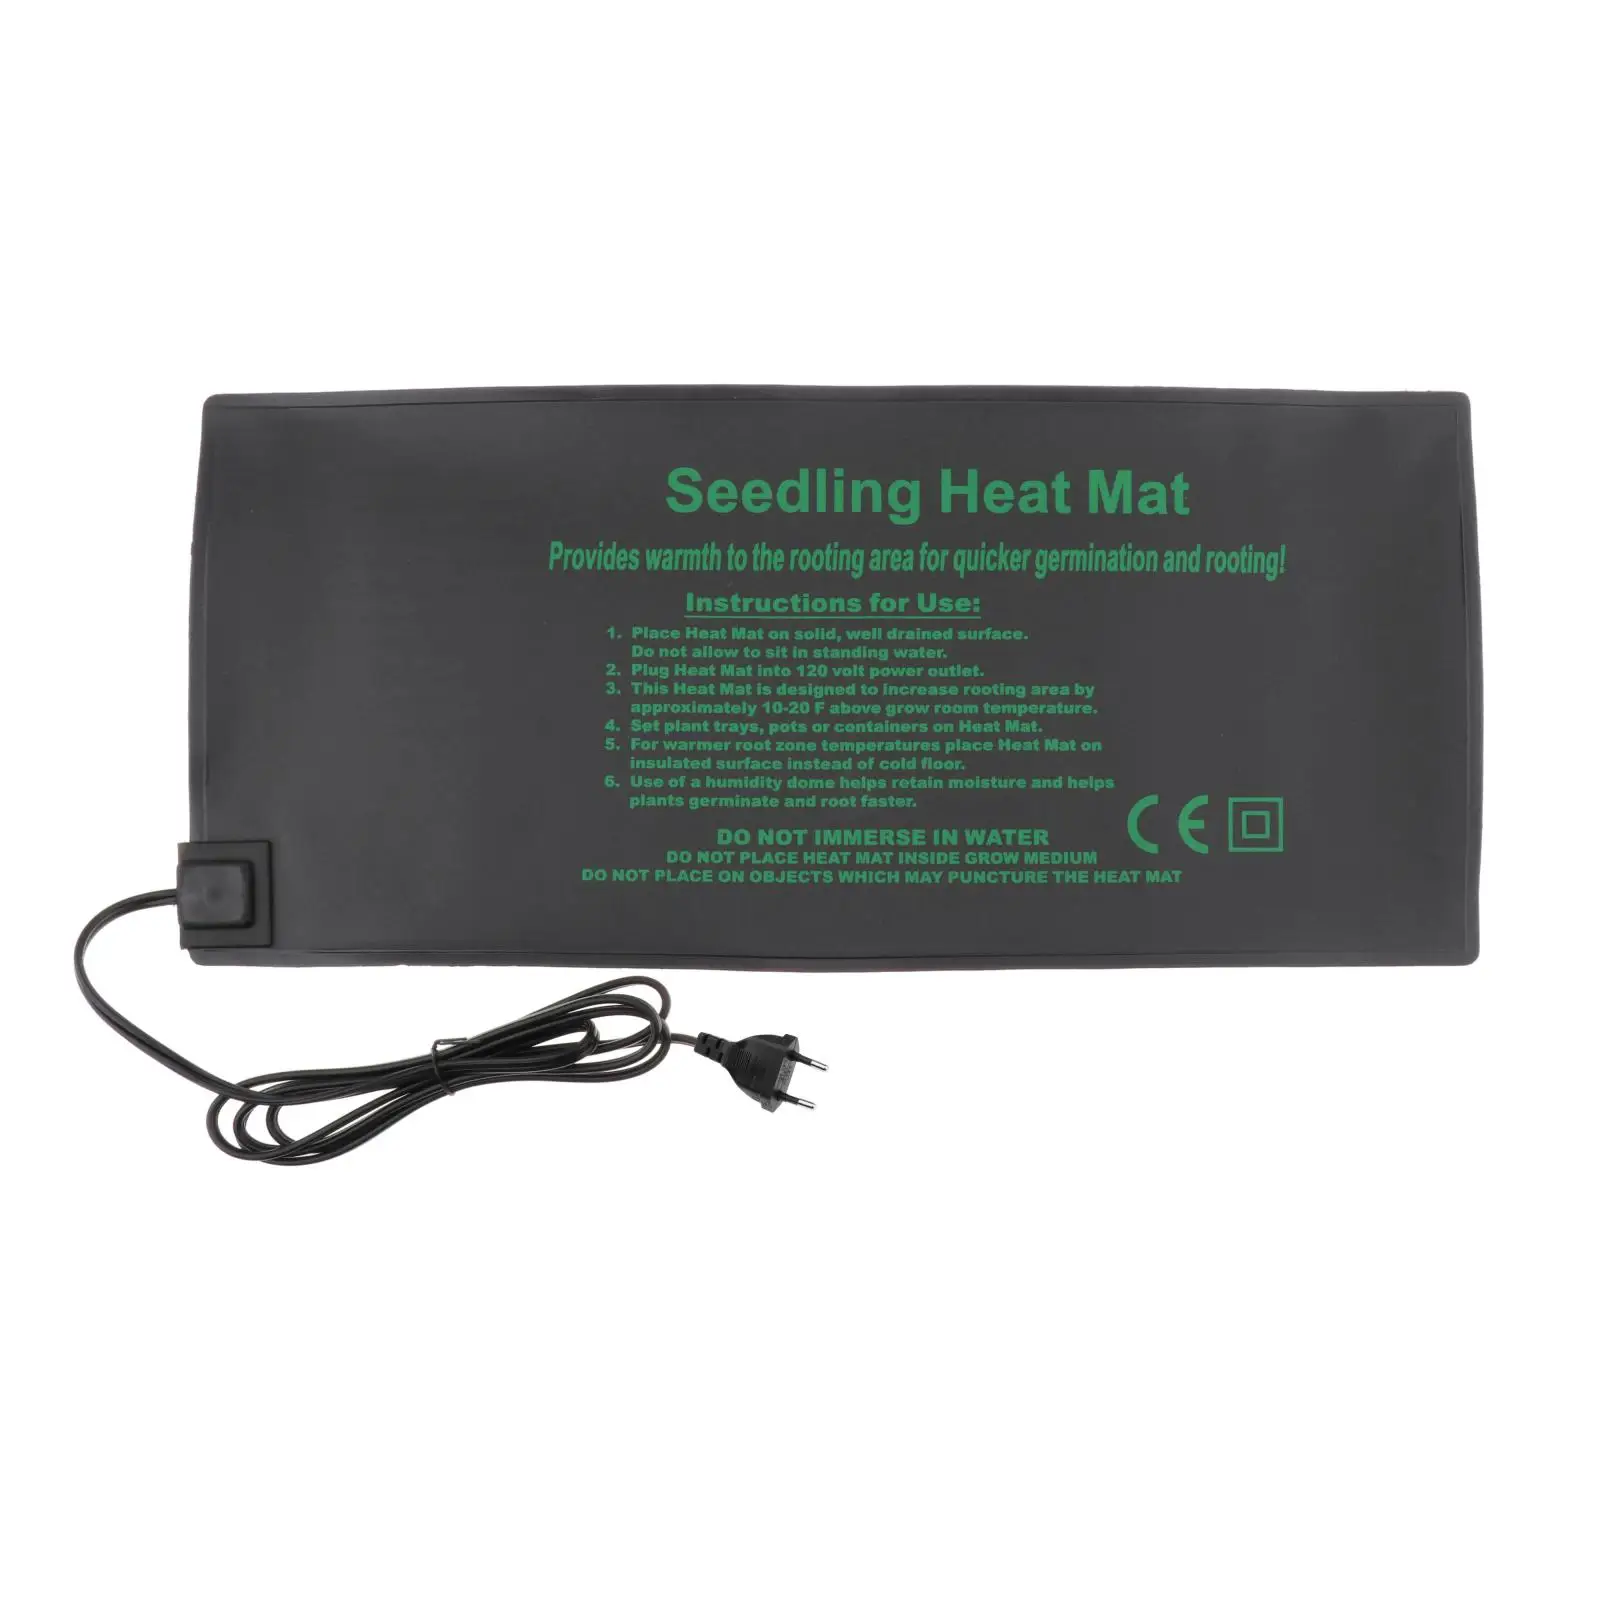 Seedling Heating Mat Waterproof Plant Seed Germination Propagation Clone Starter Pad for Gardening 52x24cm EU Plug 220V